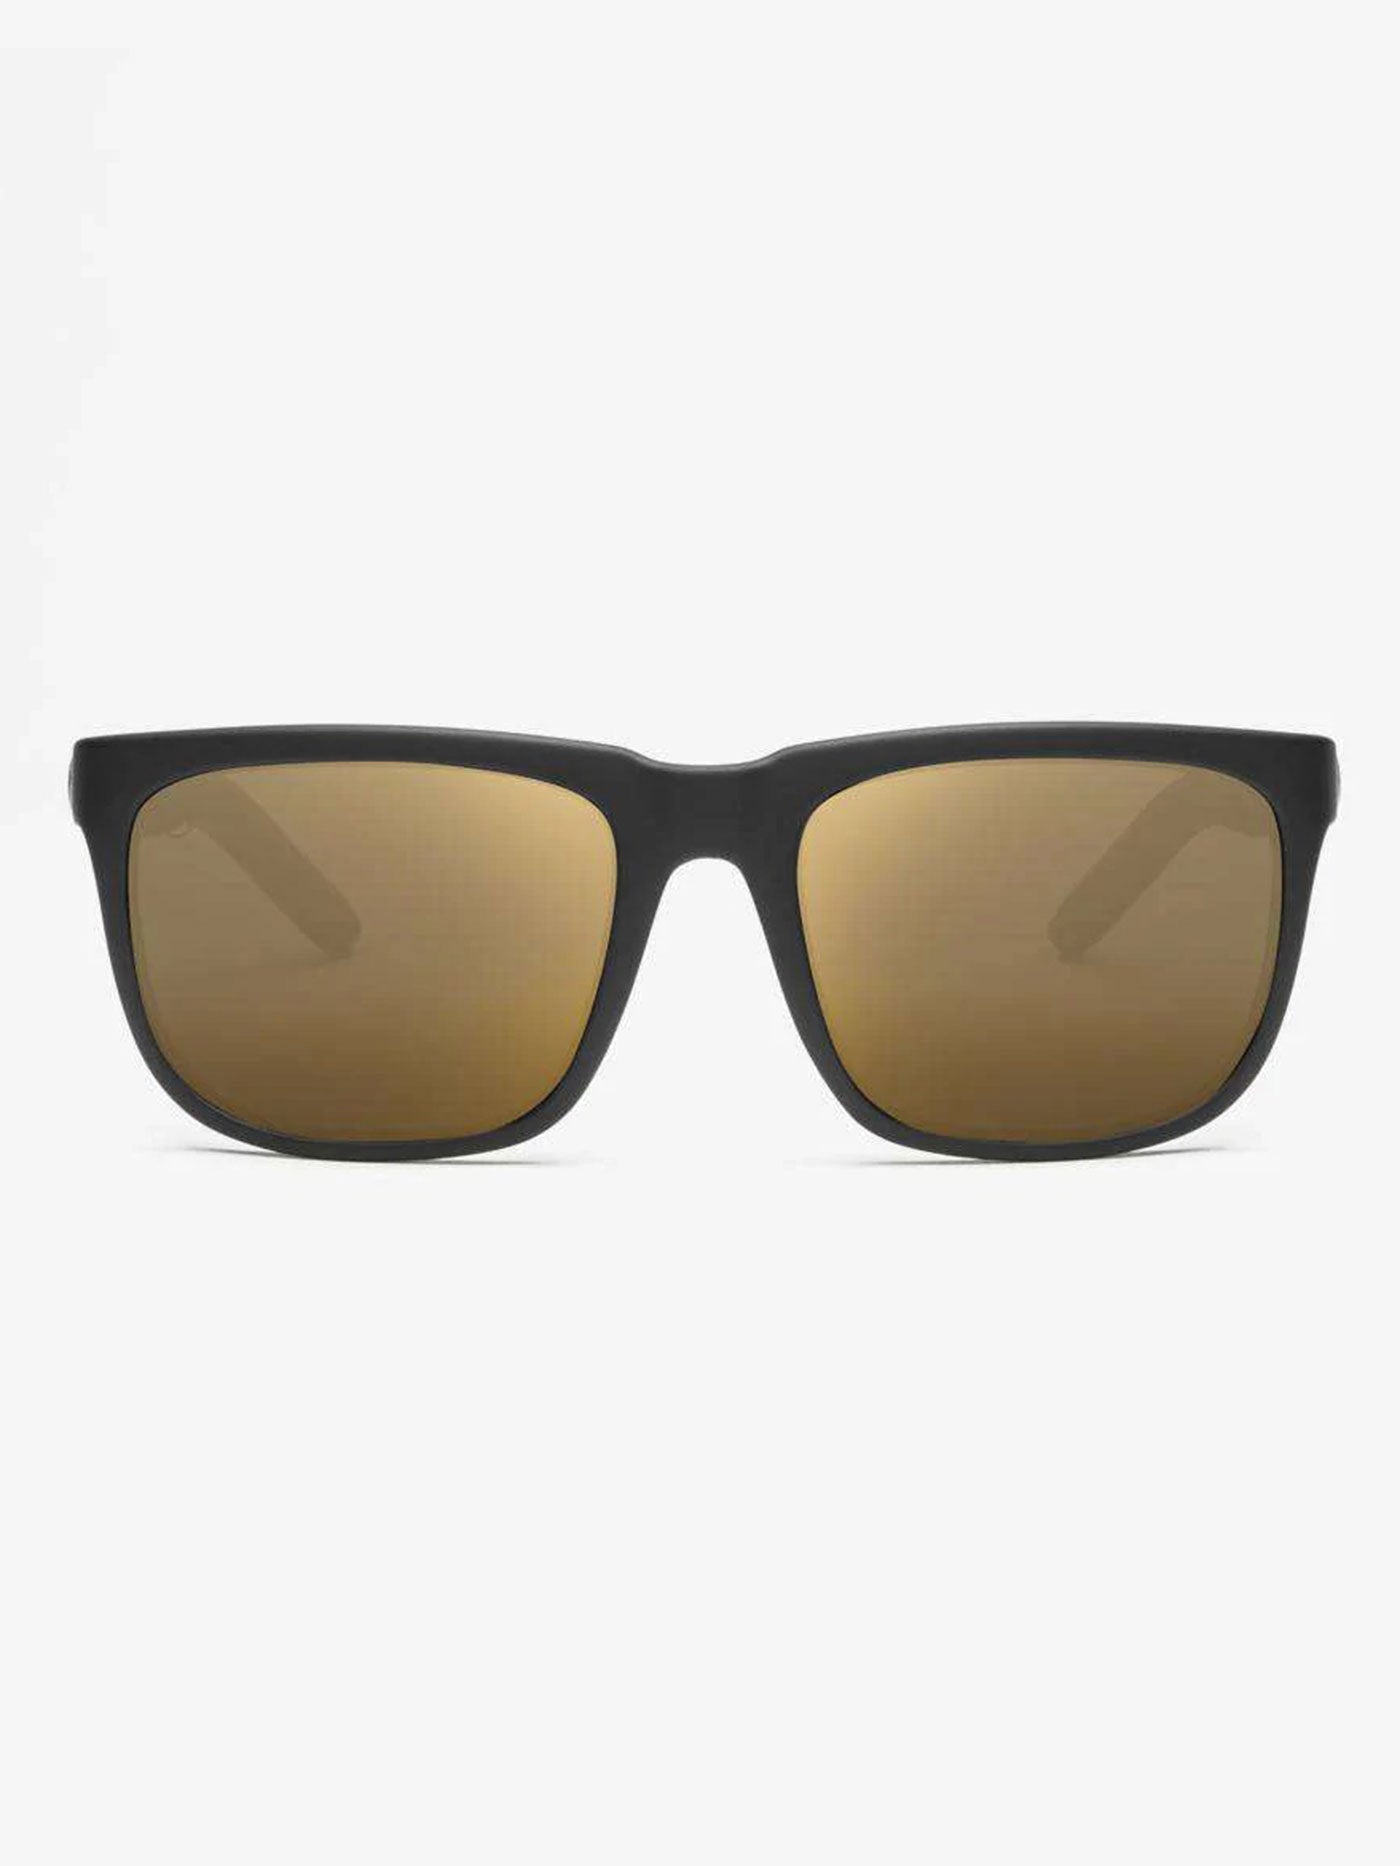 Electric JJF Knoxville Sport Black Bonze Polarized Sunglasses